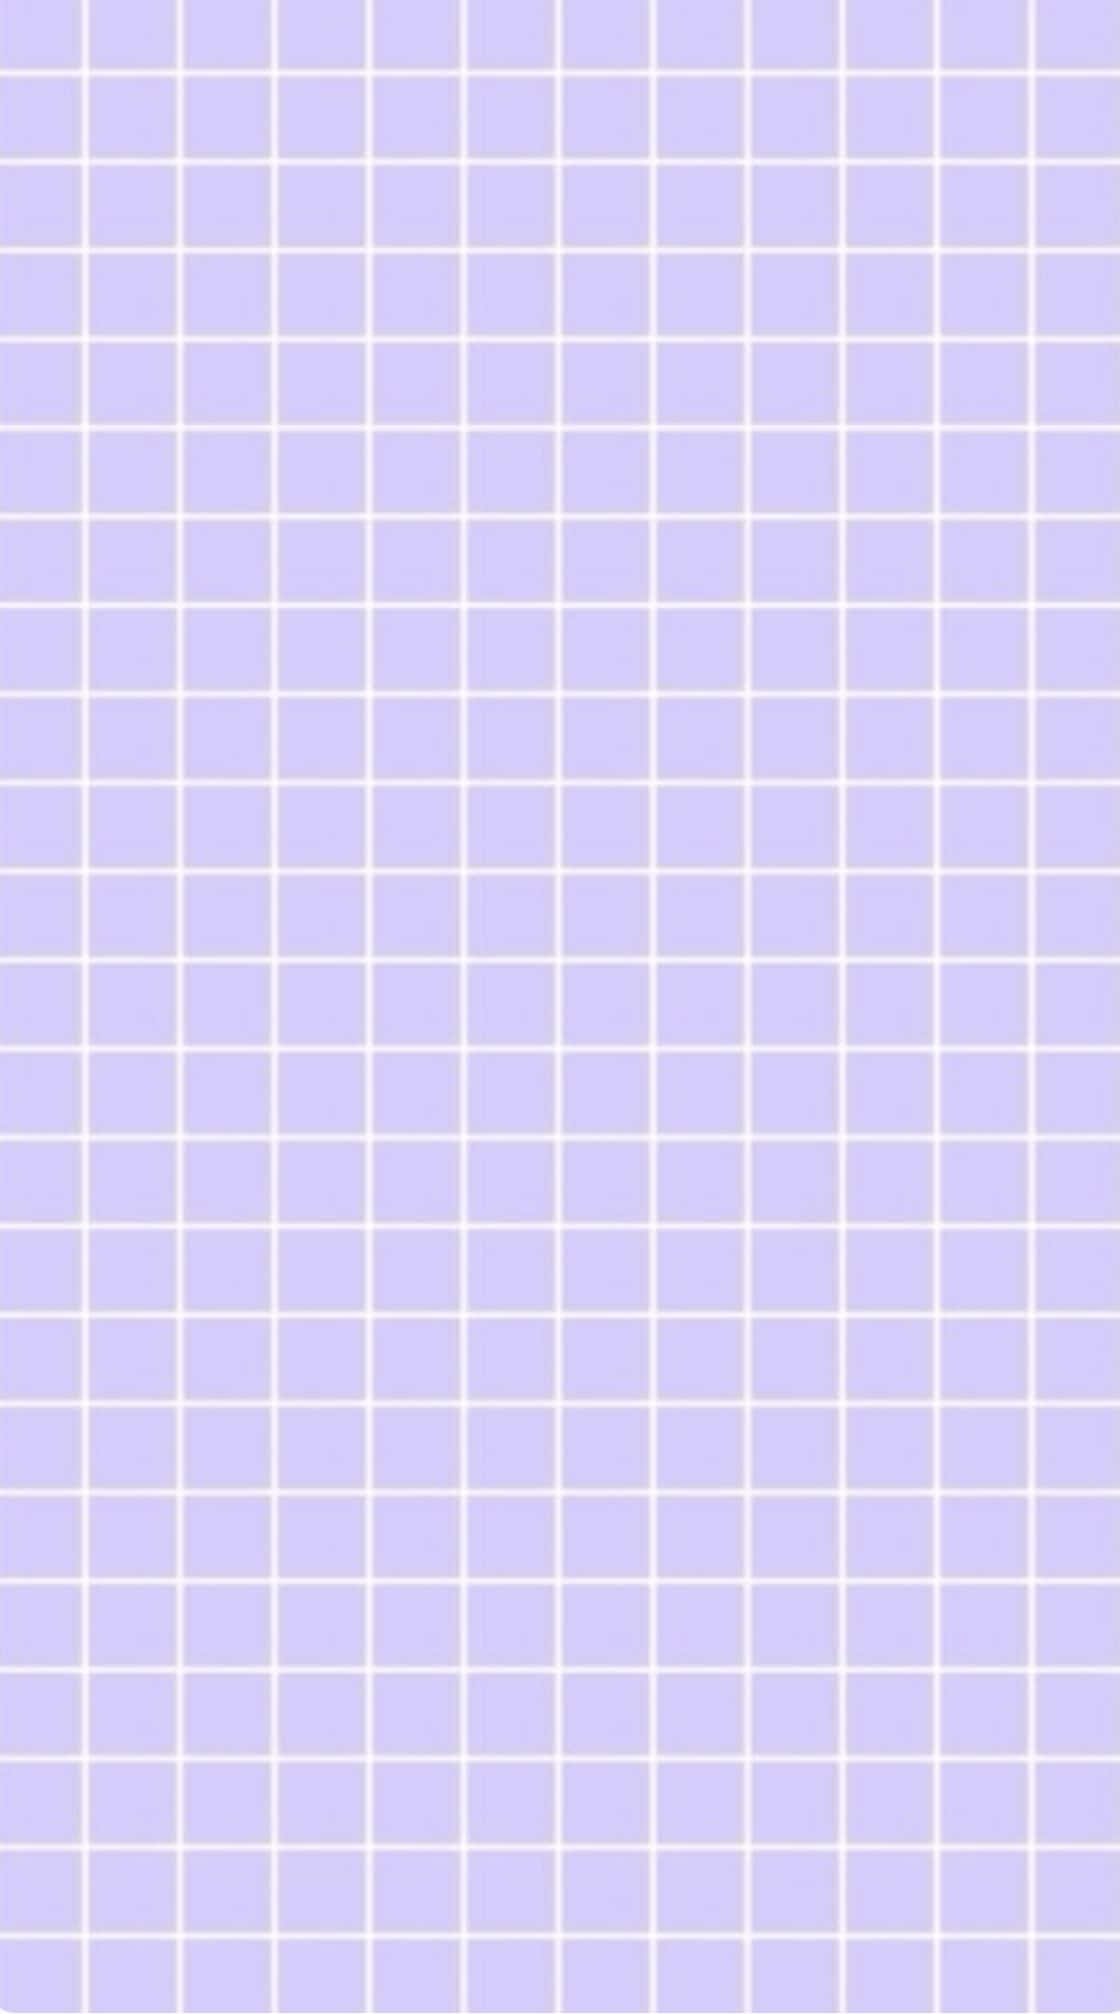 Download Pastel Aesthetic Grid Purple Wallpaper | Wallpapers.com